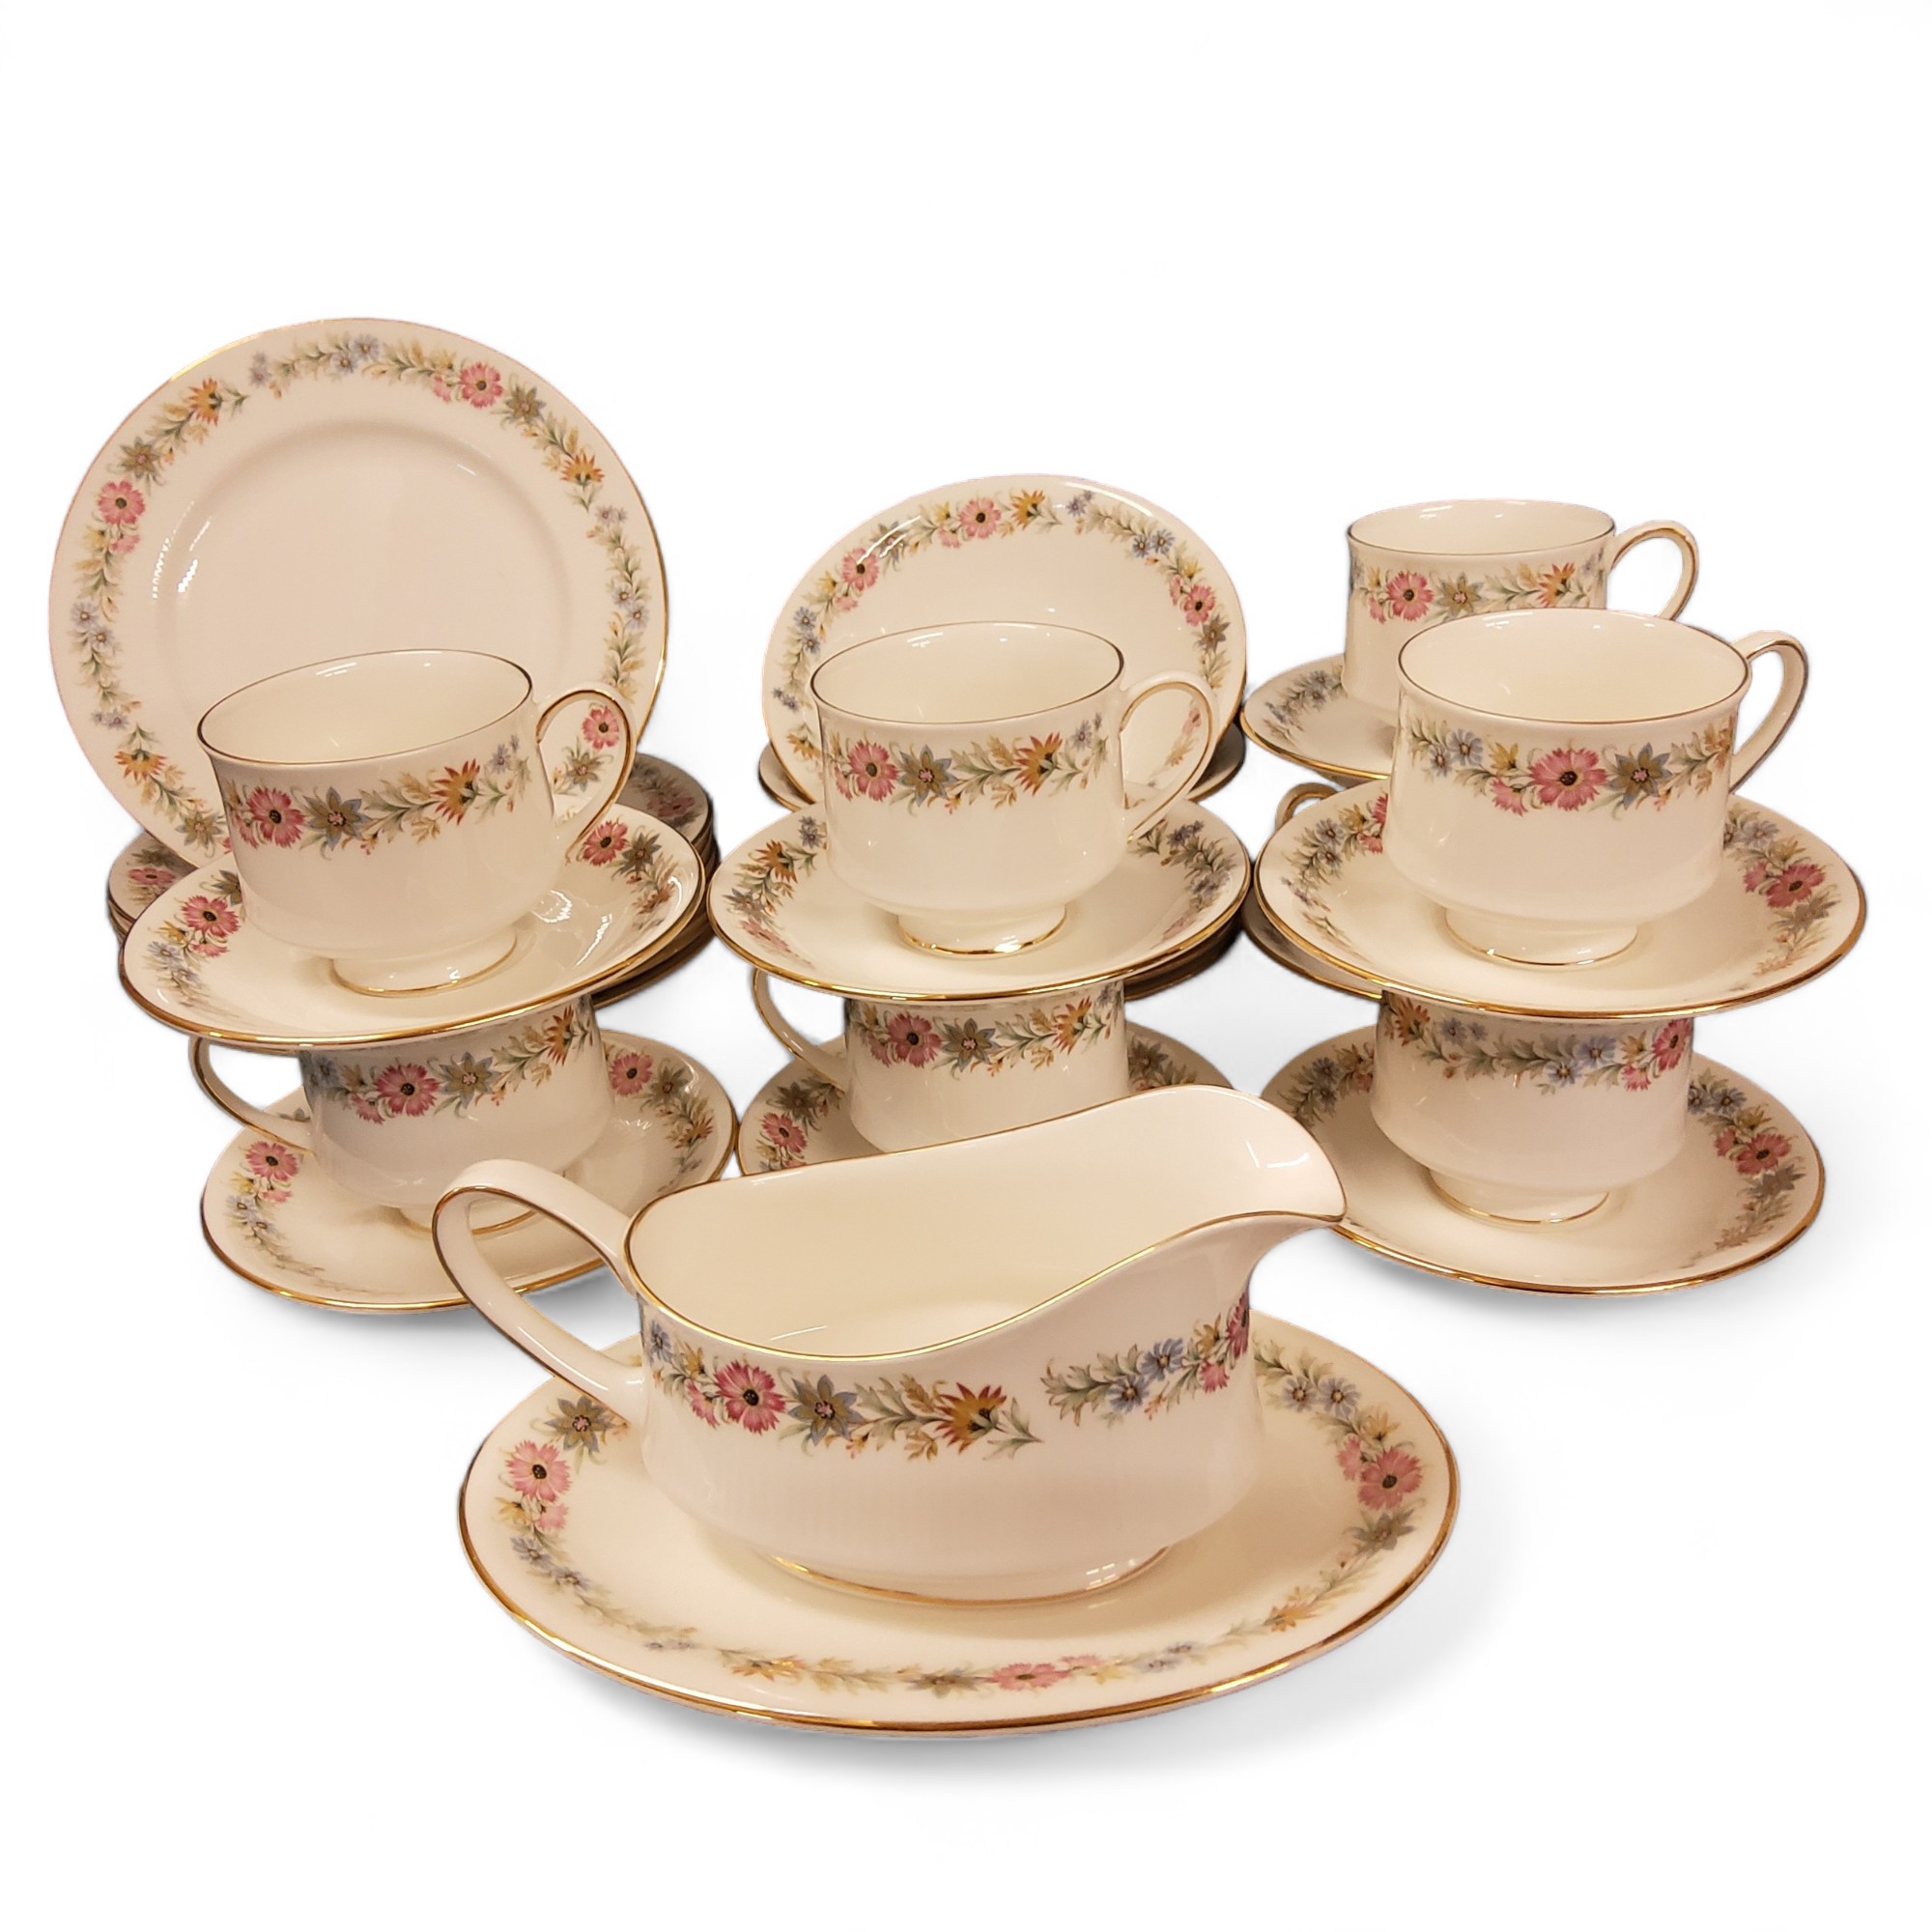 A Royal Albert Belinda pattern tea service,  comprising eight teacups, saucers, side plates, dessert